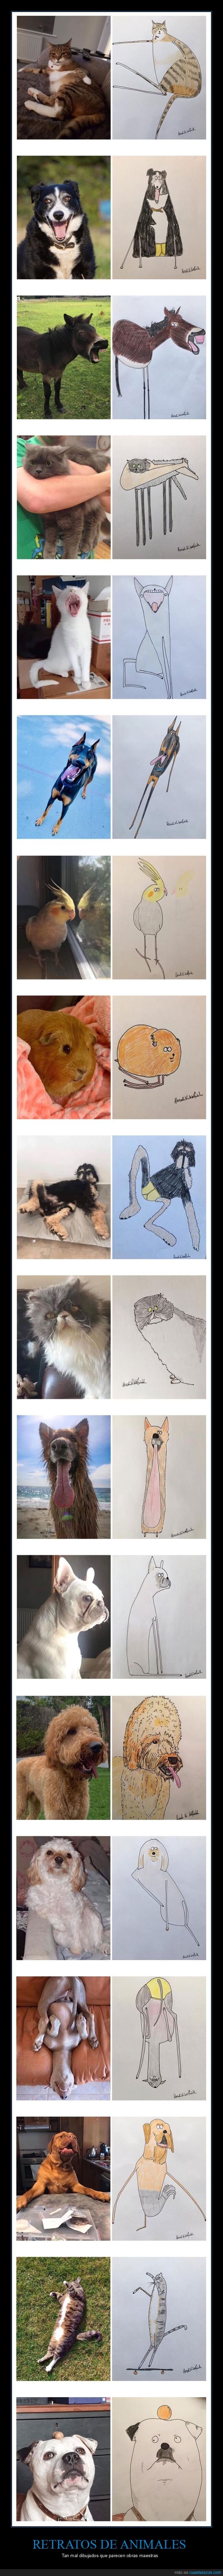 animales,mal dibujados,retratos